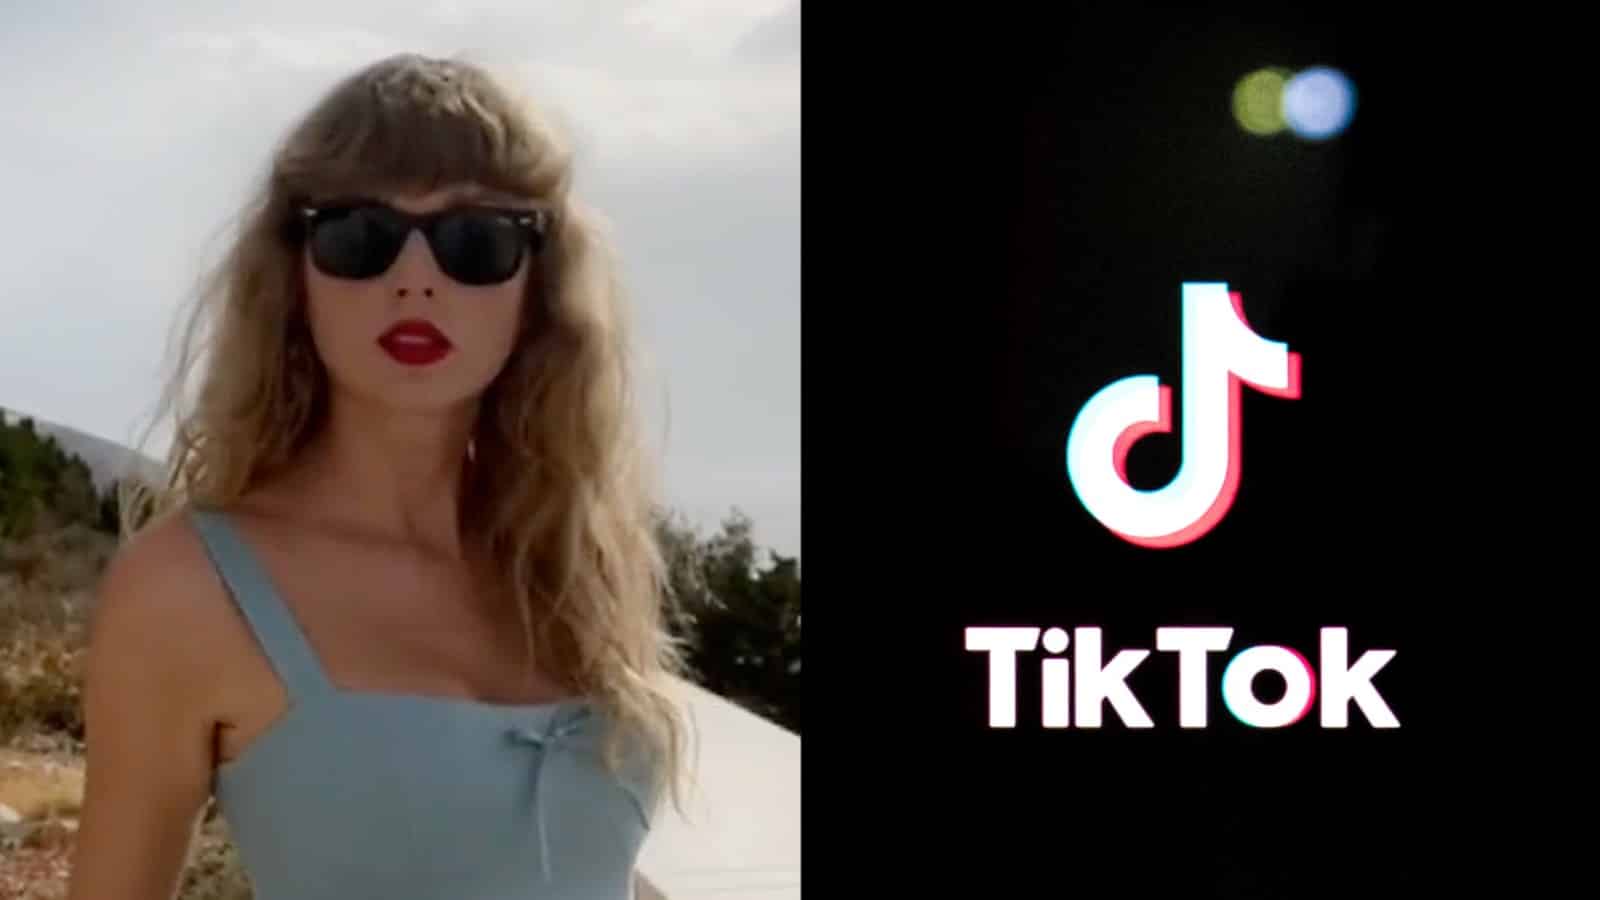 Taylor Swift next to the TikTok logo